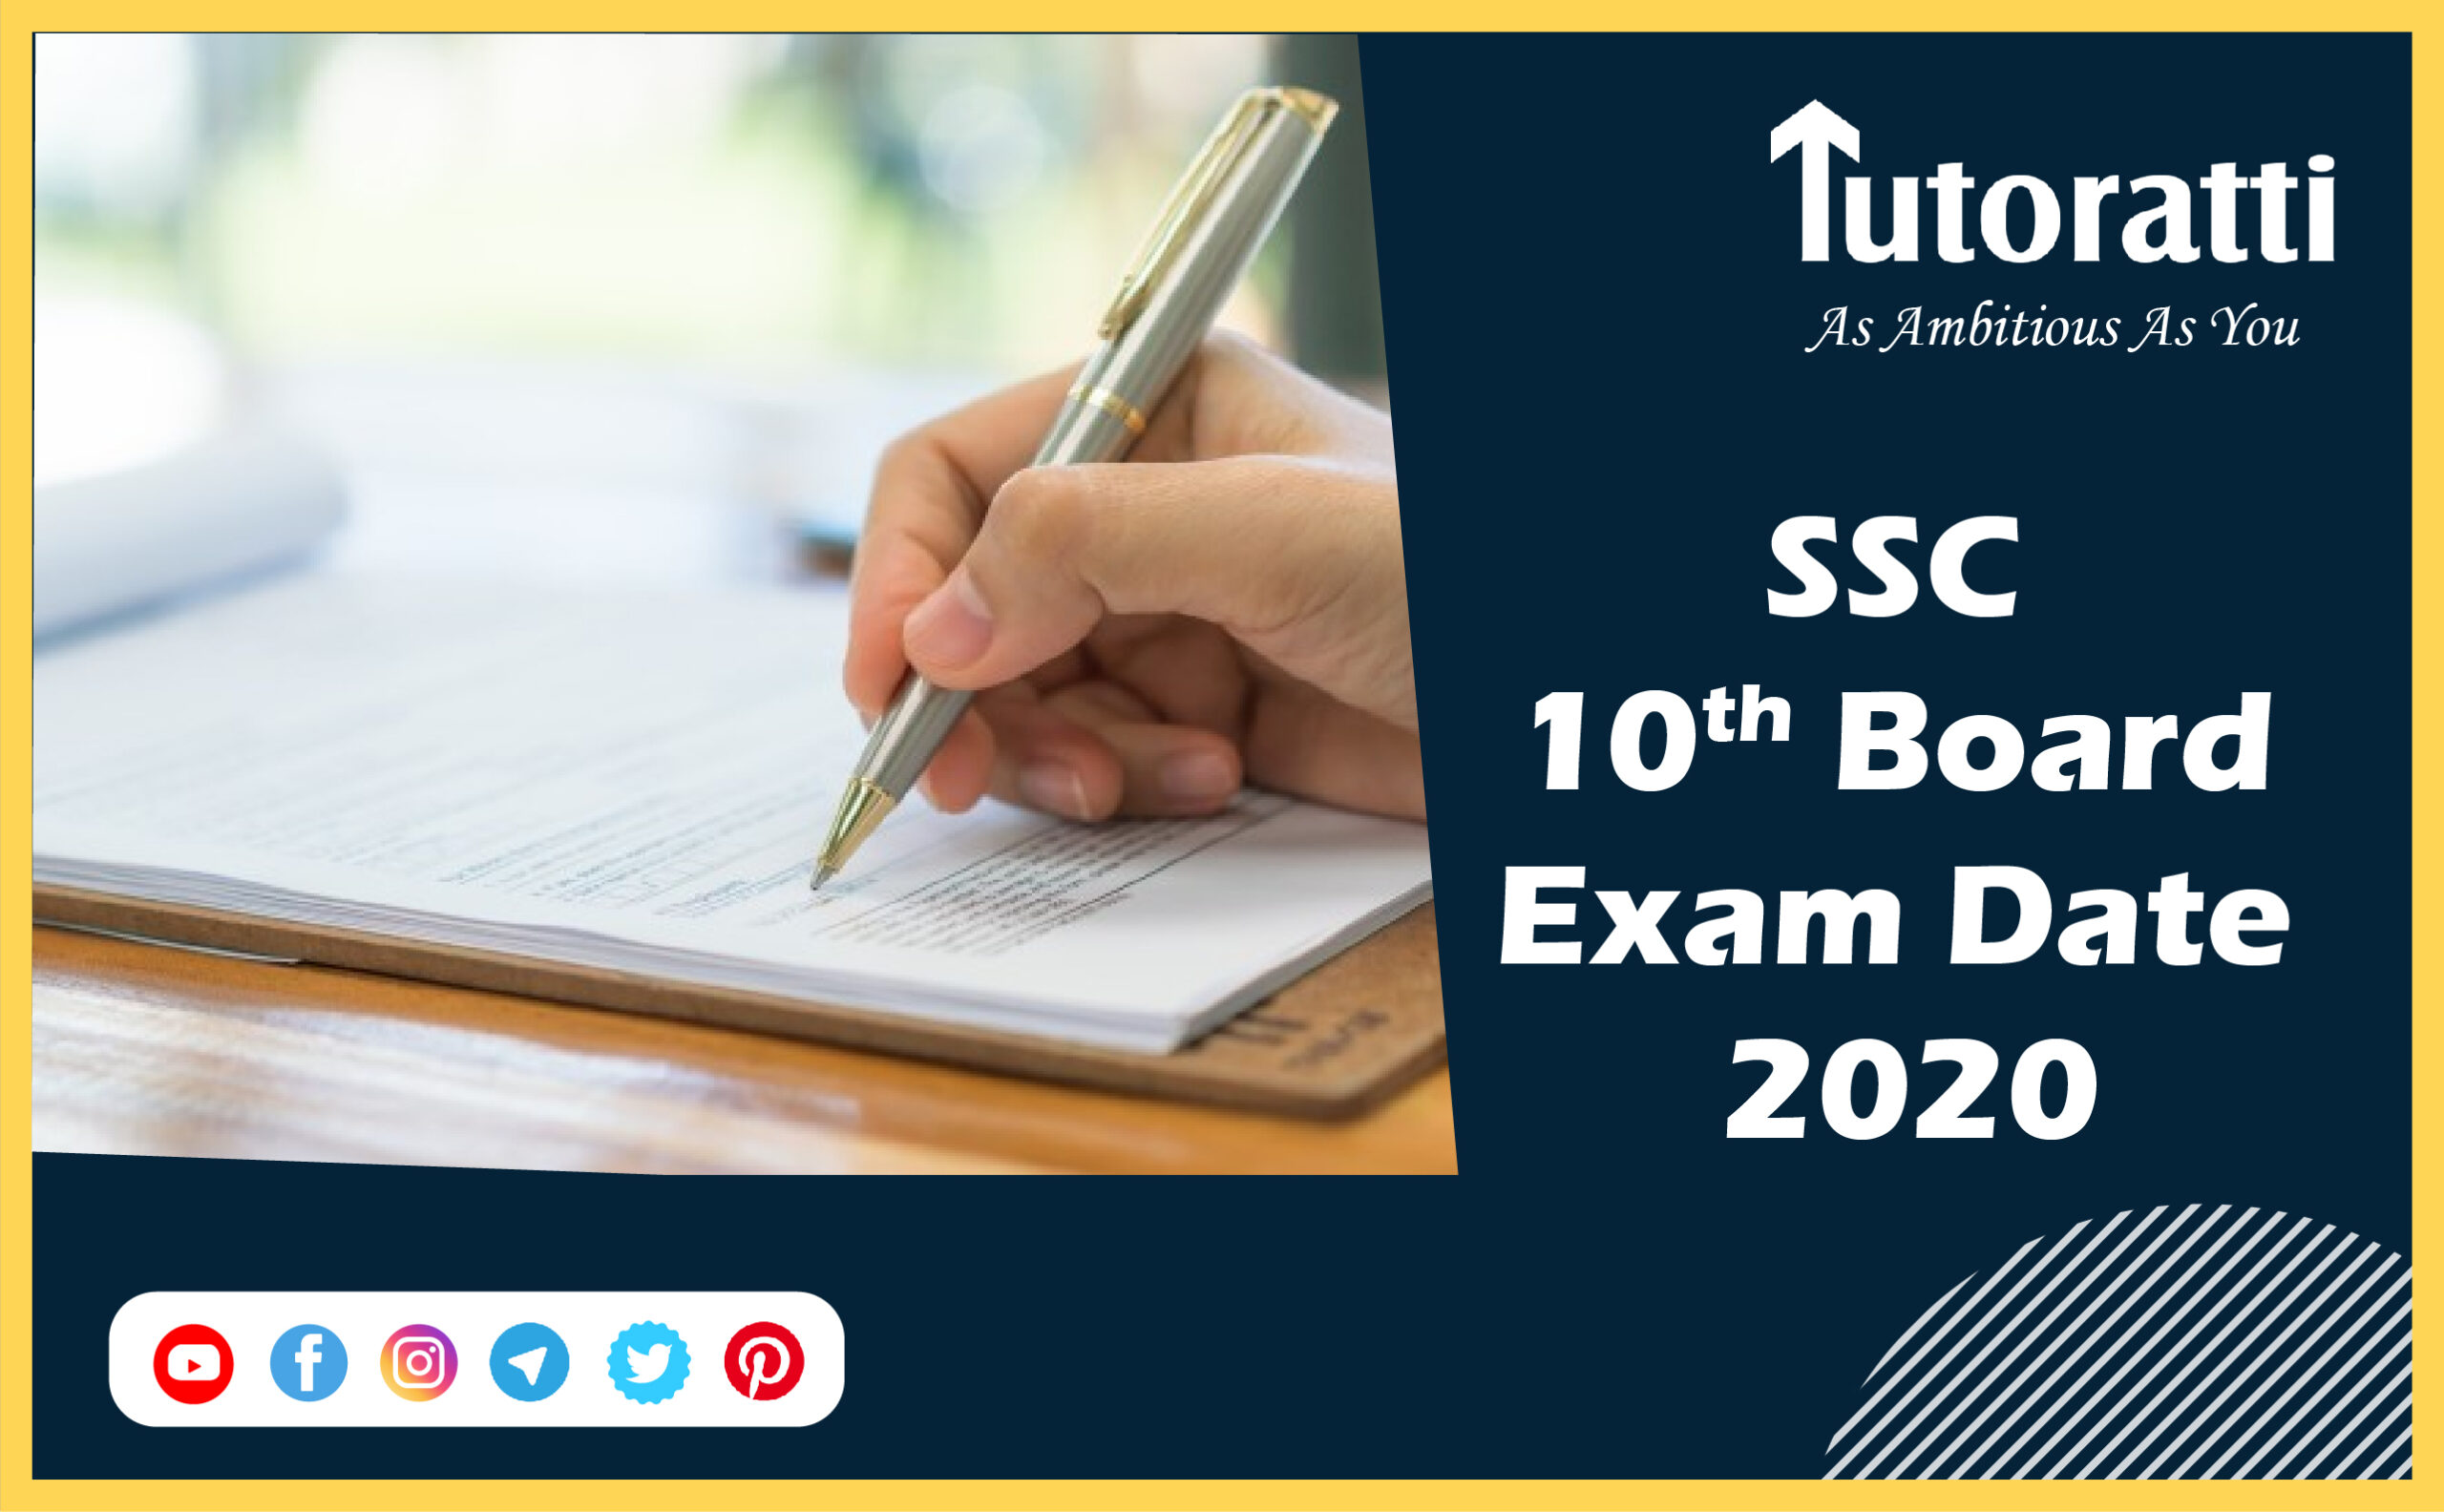 SSC 10th Board Exam Date 2020